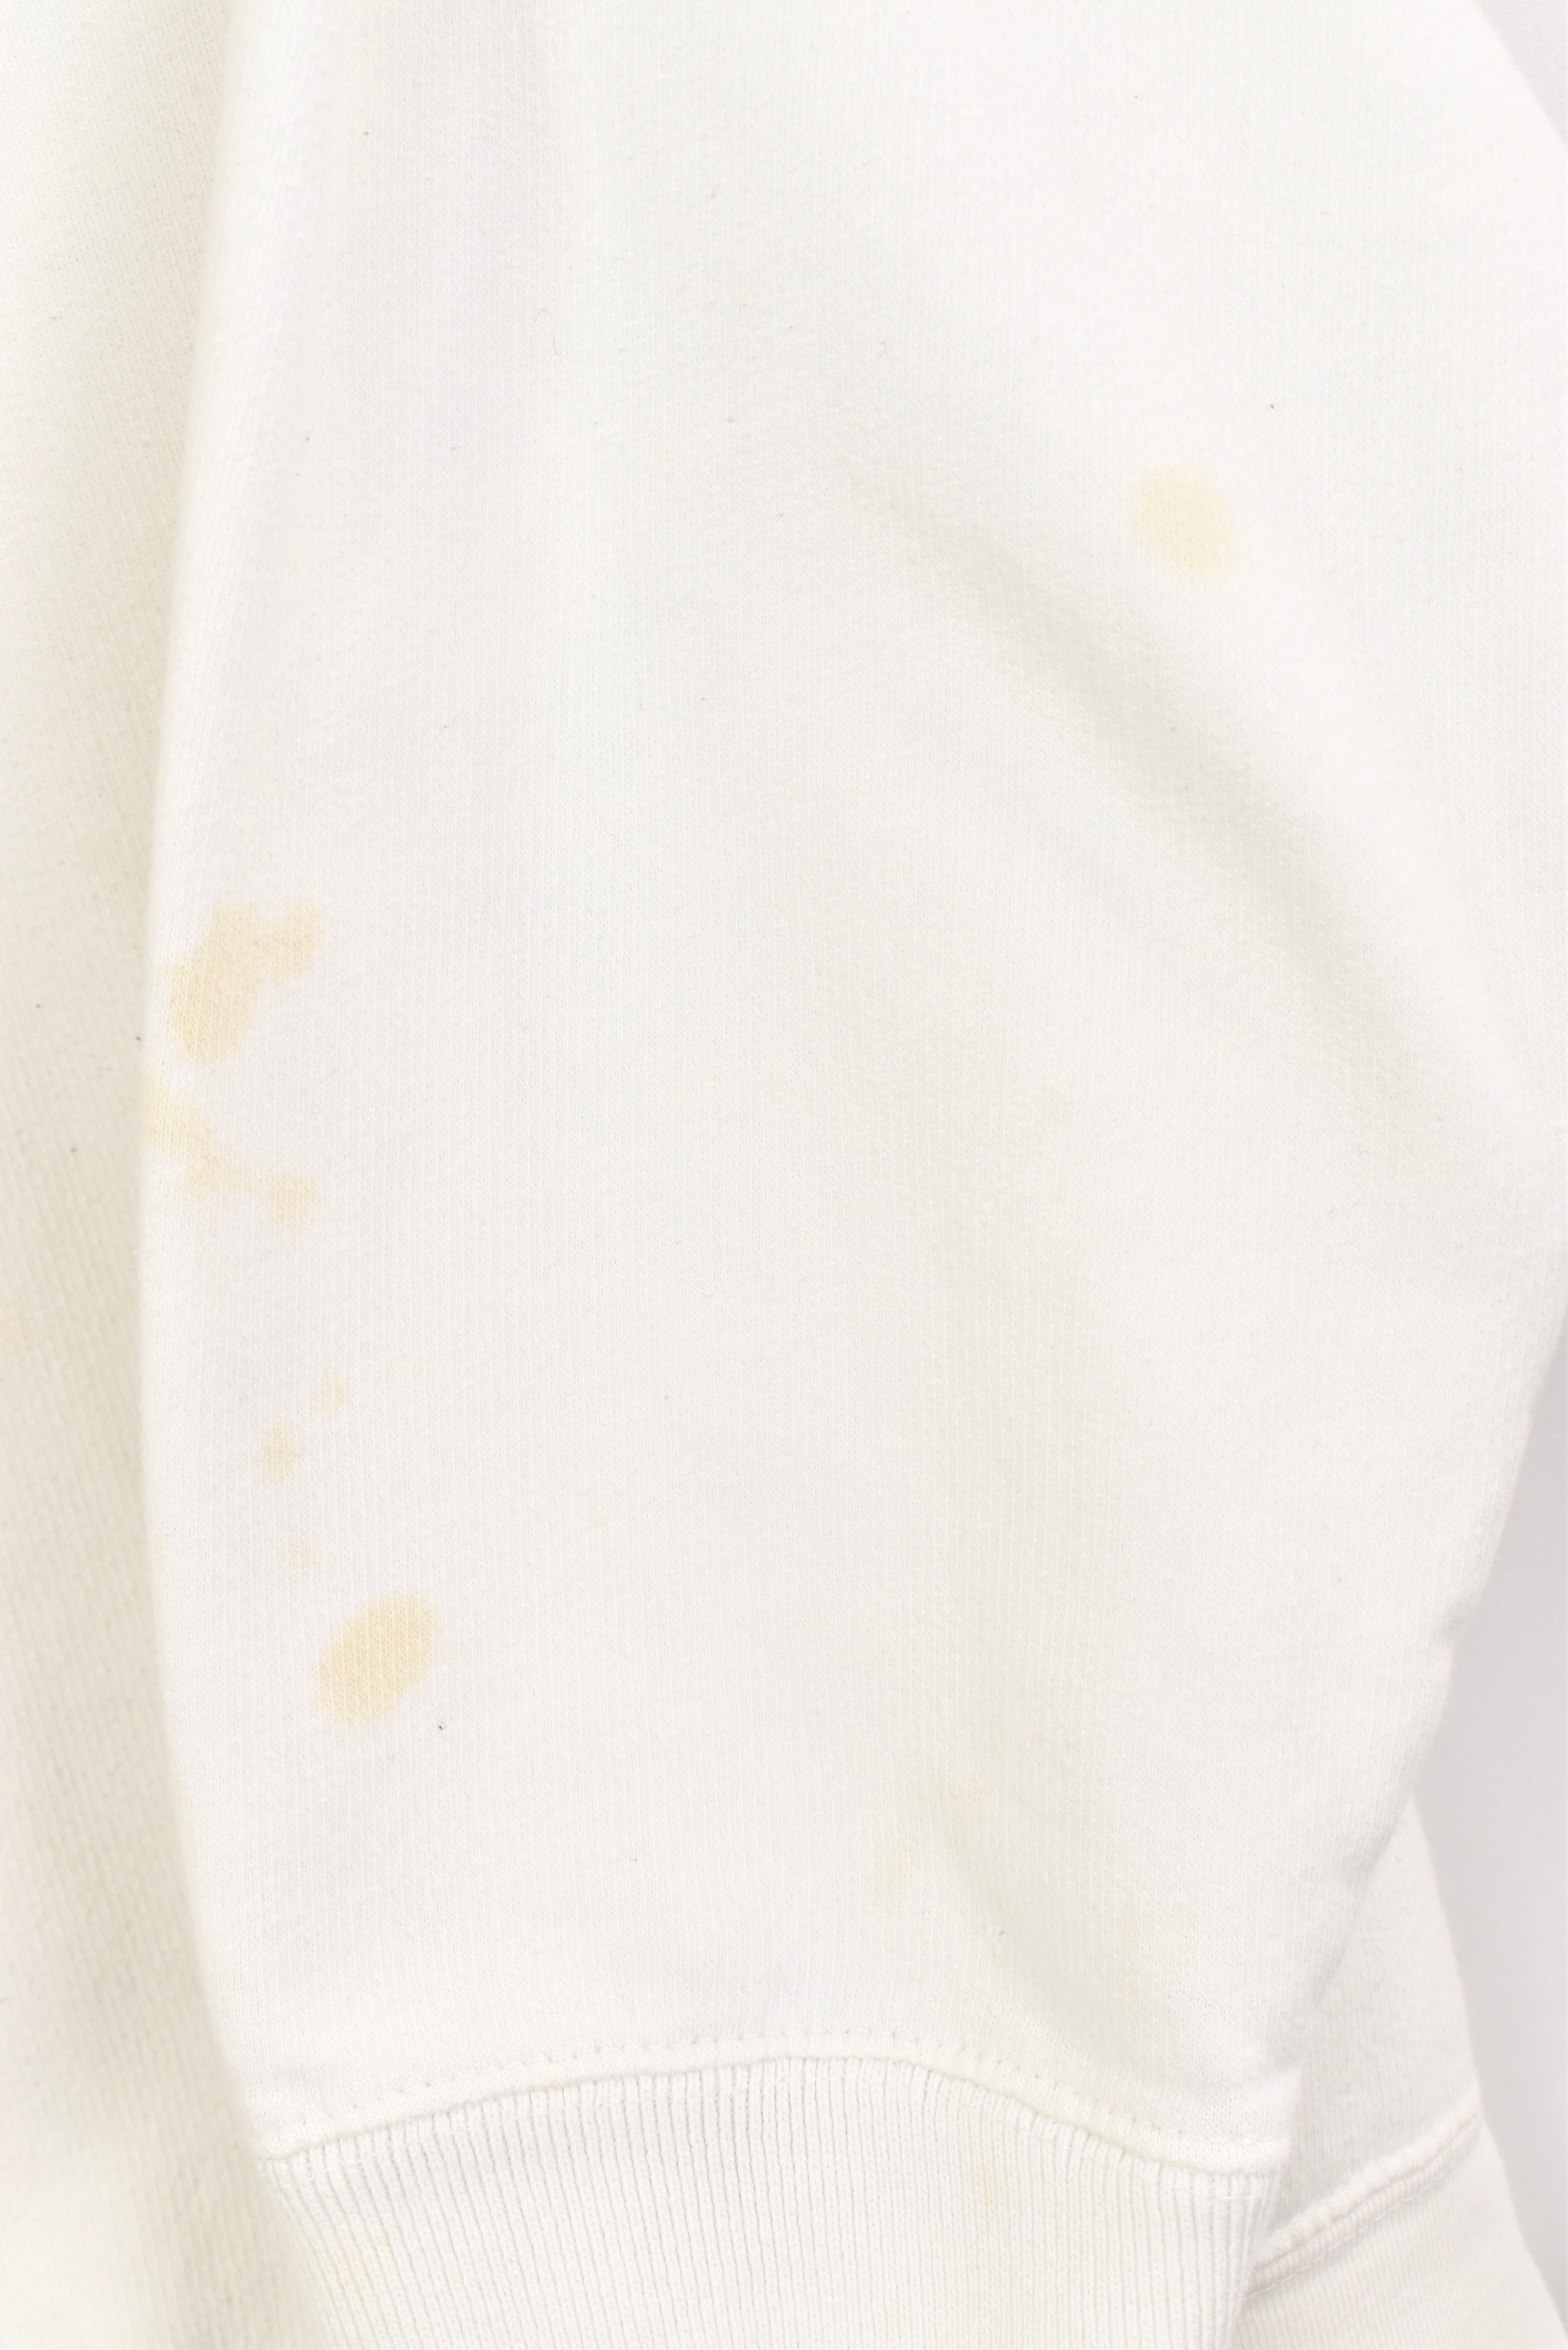 Vintage Women's Disney Pooh embroidered white sweatshirt | Large DISNEY / CARTOON